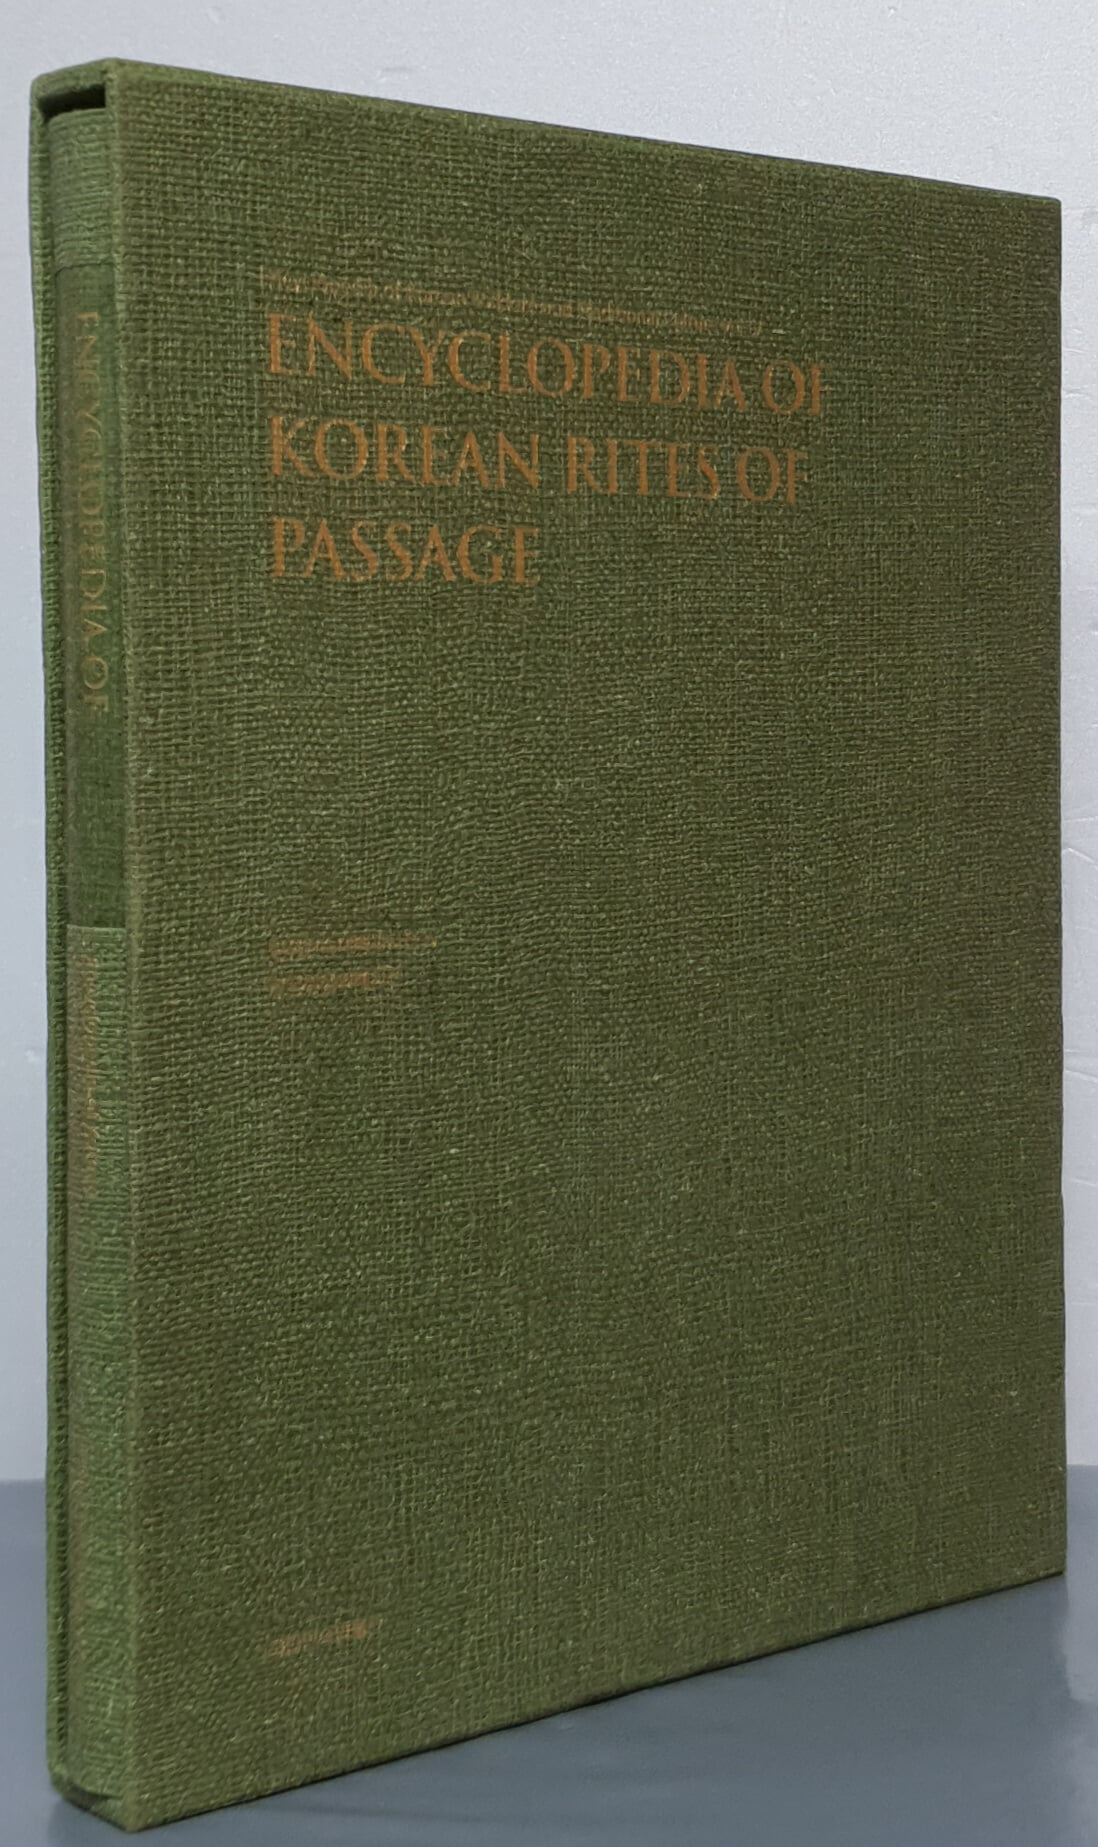 Encyclopedia of Korean rites of passage (Hardcover, 한국일생의례사전 영문판) (한국민속대백과사전 4) 